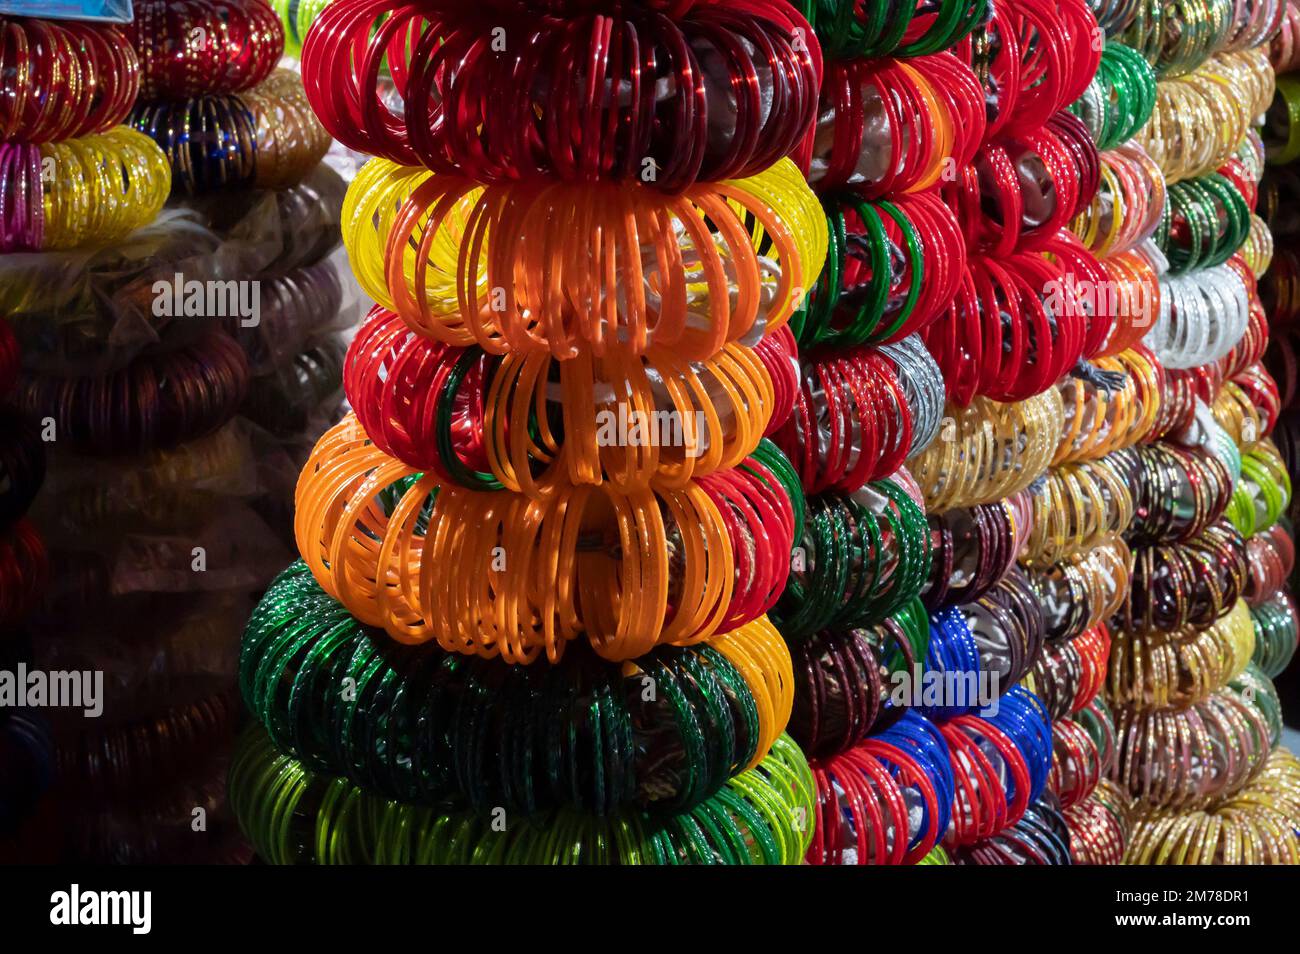 Beautiful Rajasthani Bangles being sold at famous Sardar Market and Ghanta ghar Clock tower in Jodhpur, Rajasthan, India. Stock Photo